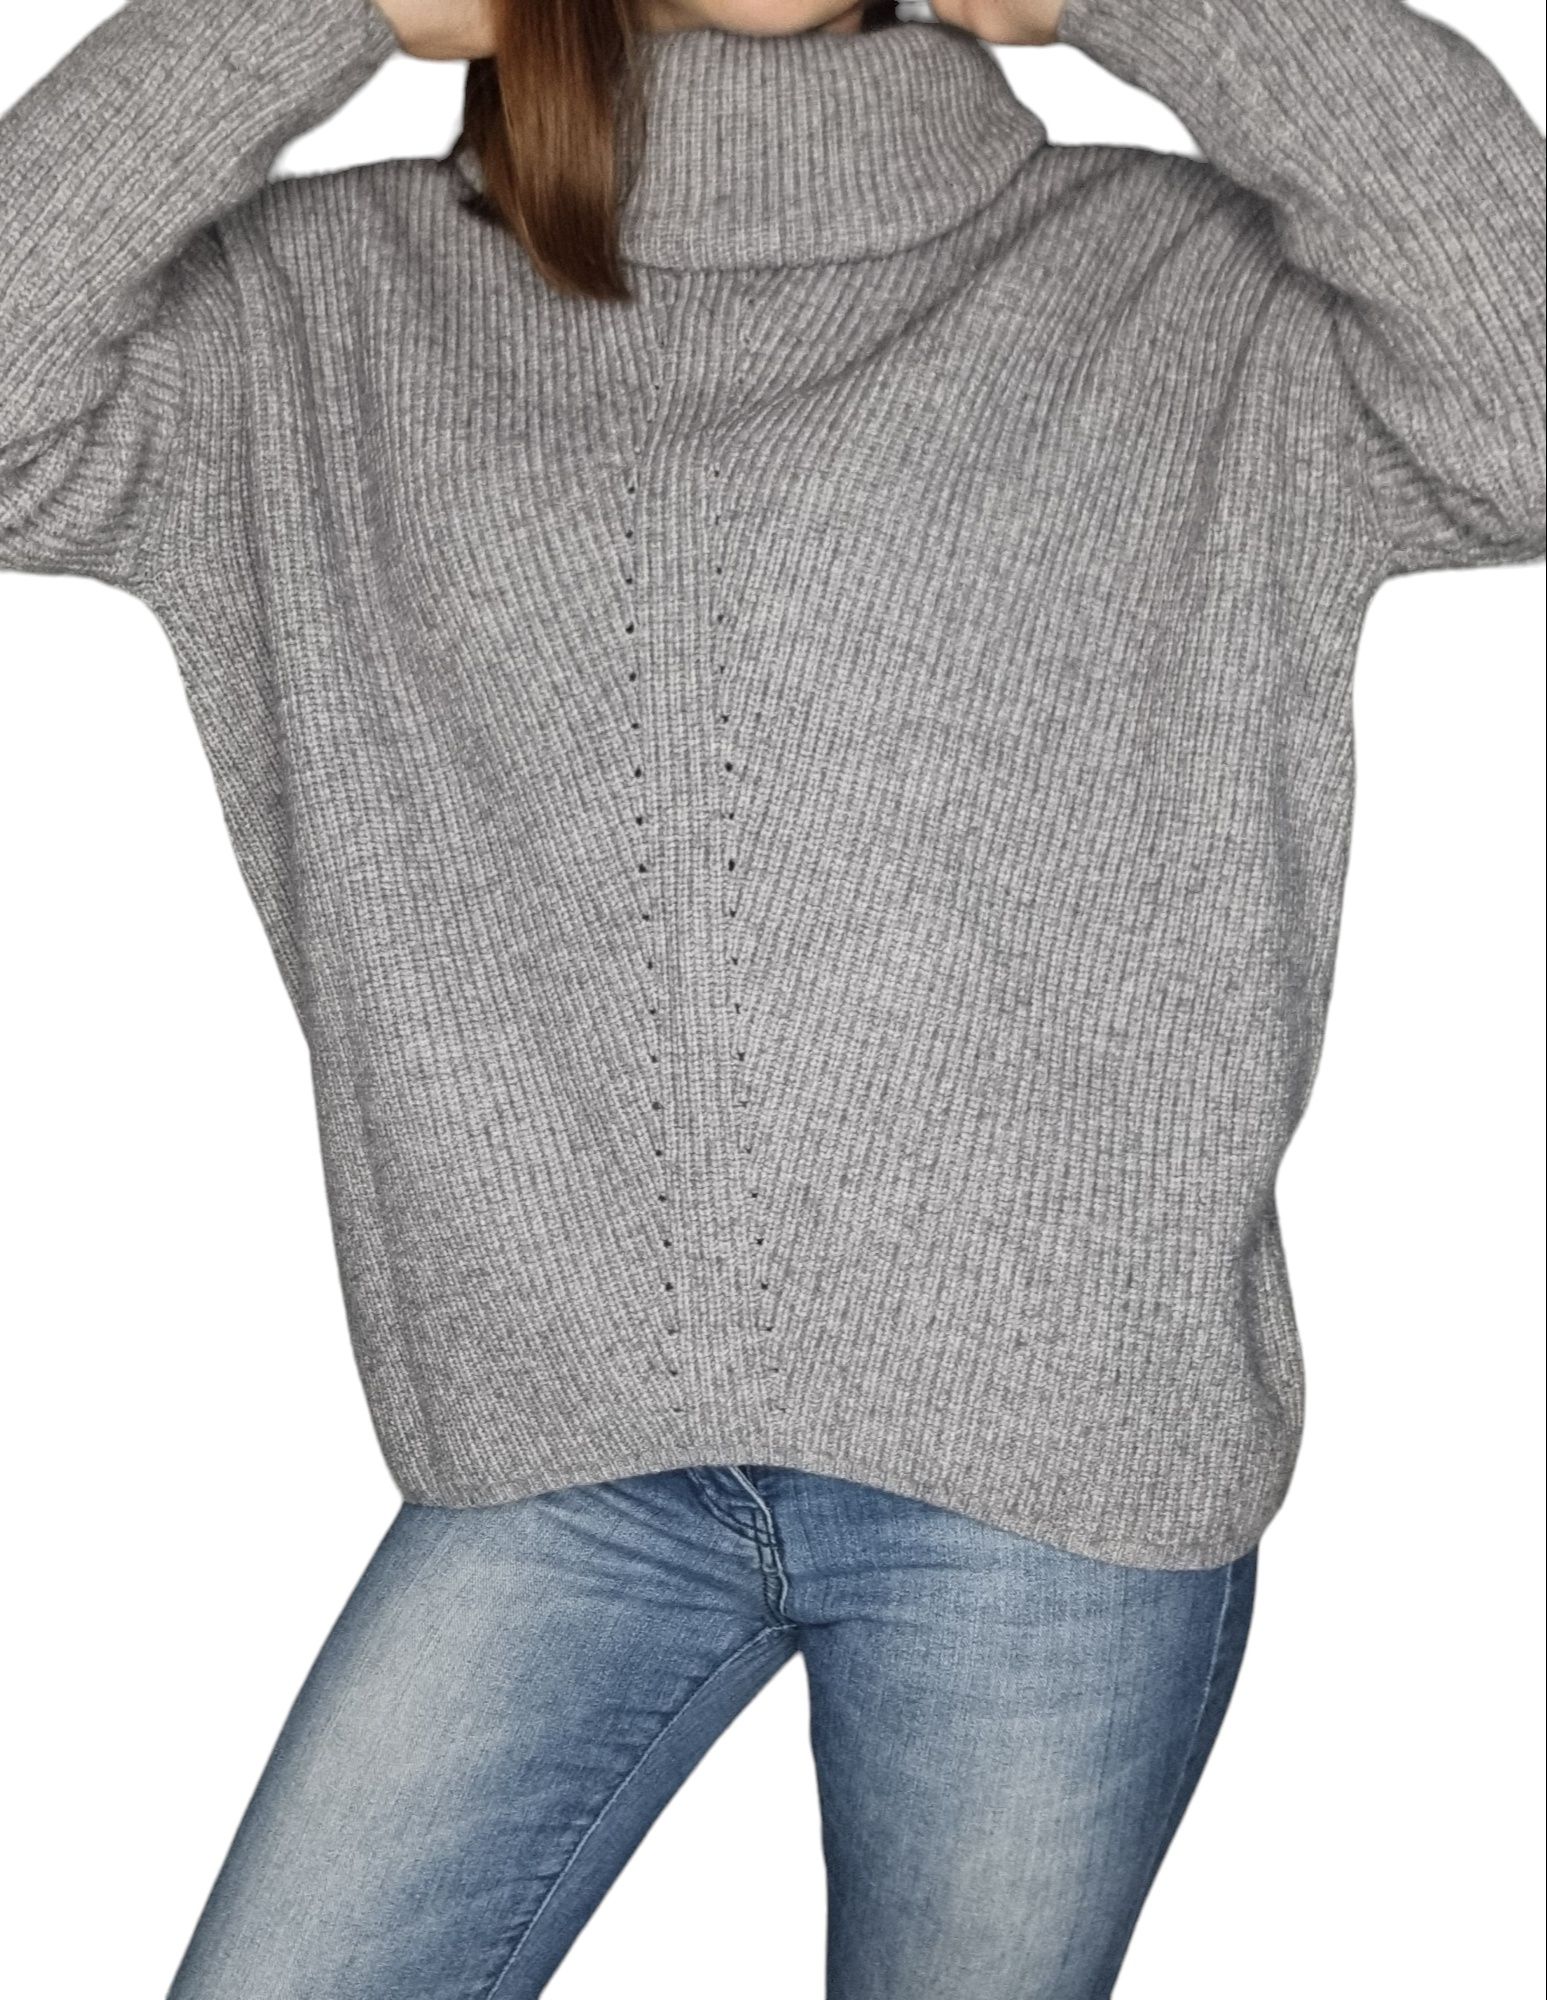 Sweterek Reserved oversize Rozmiar M pasuje też na L/XL 40/42